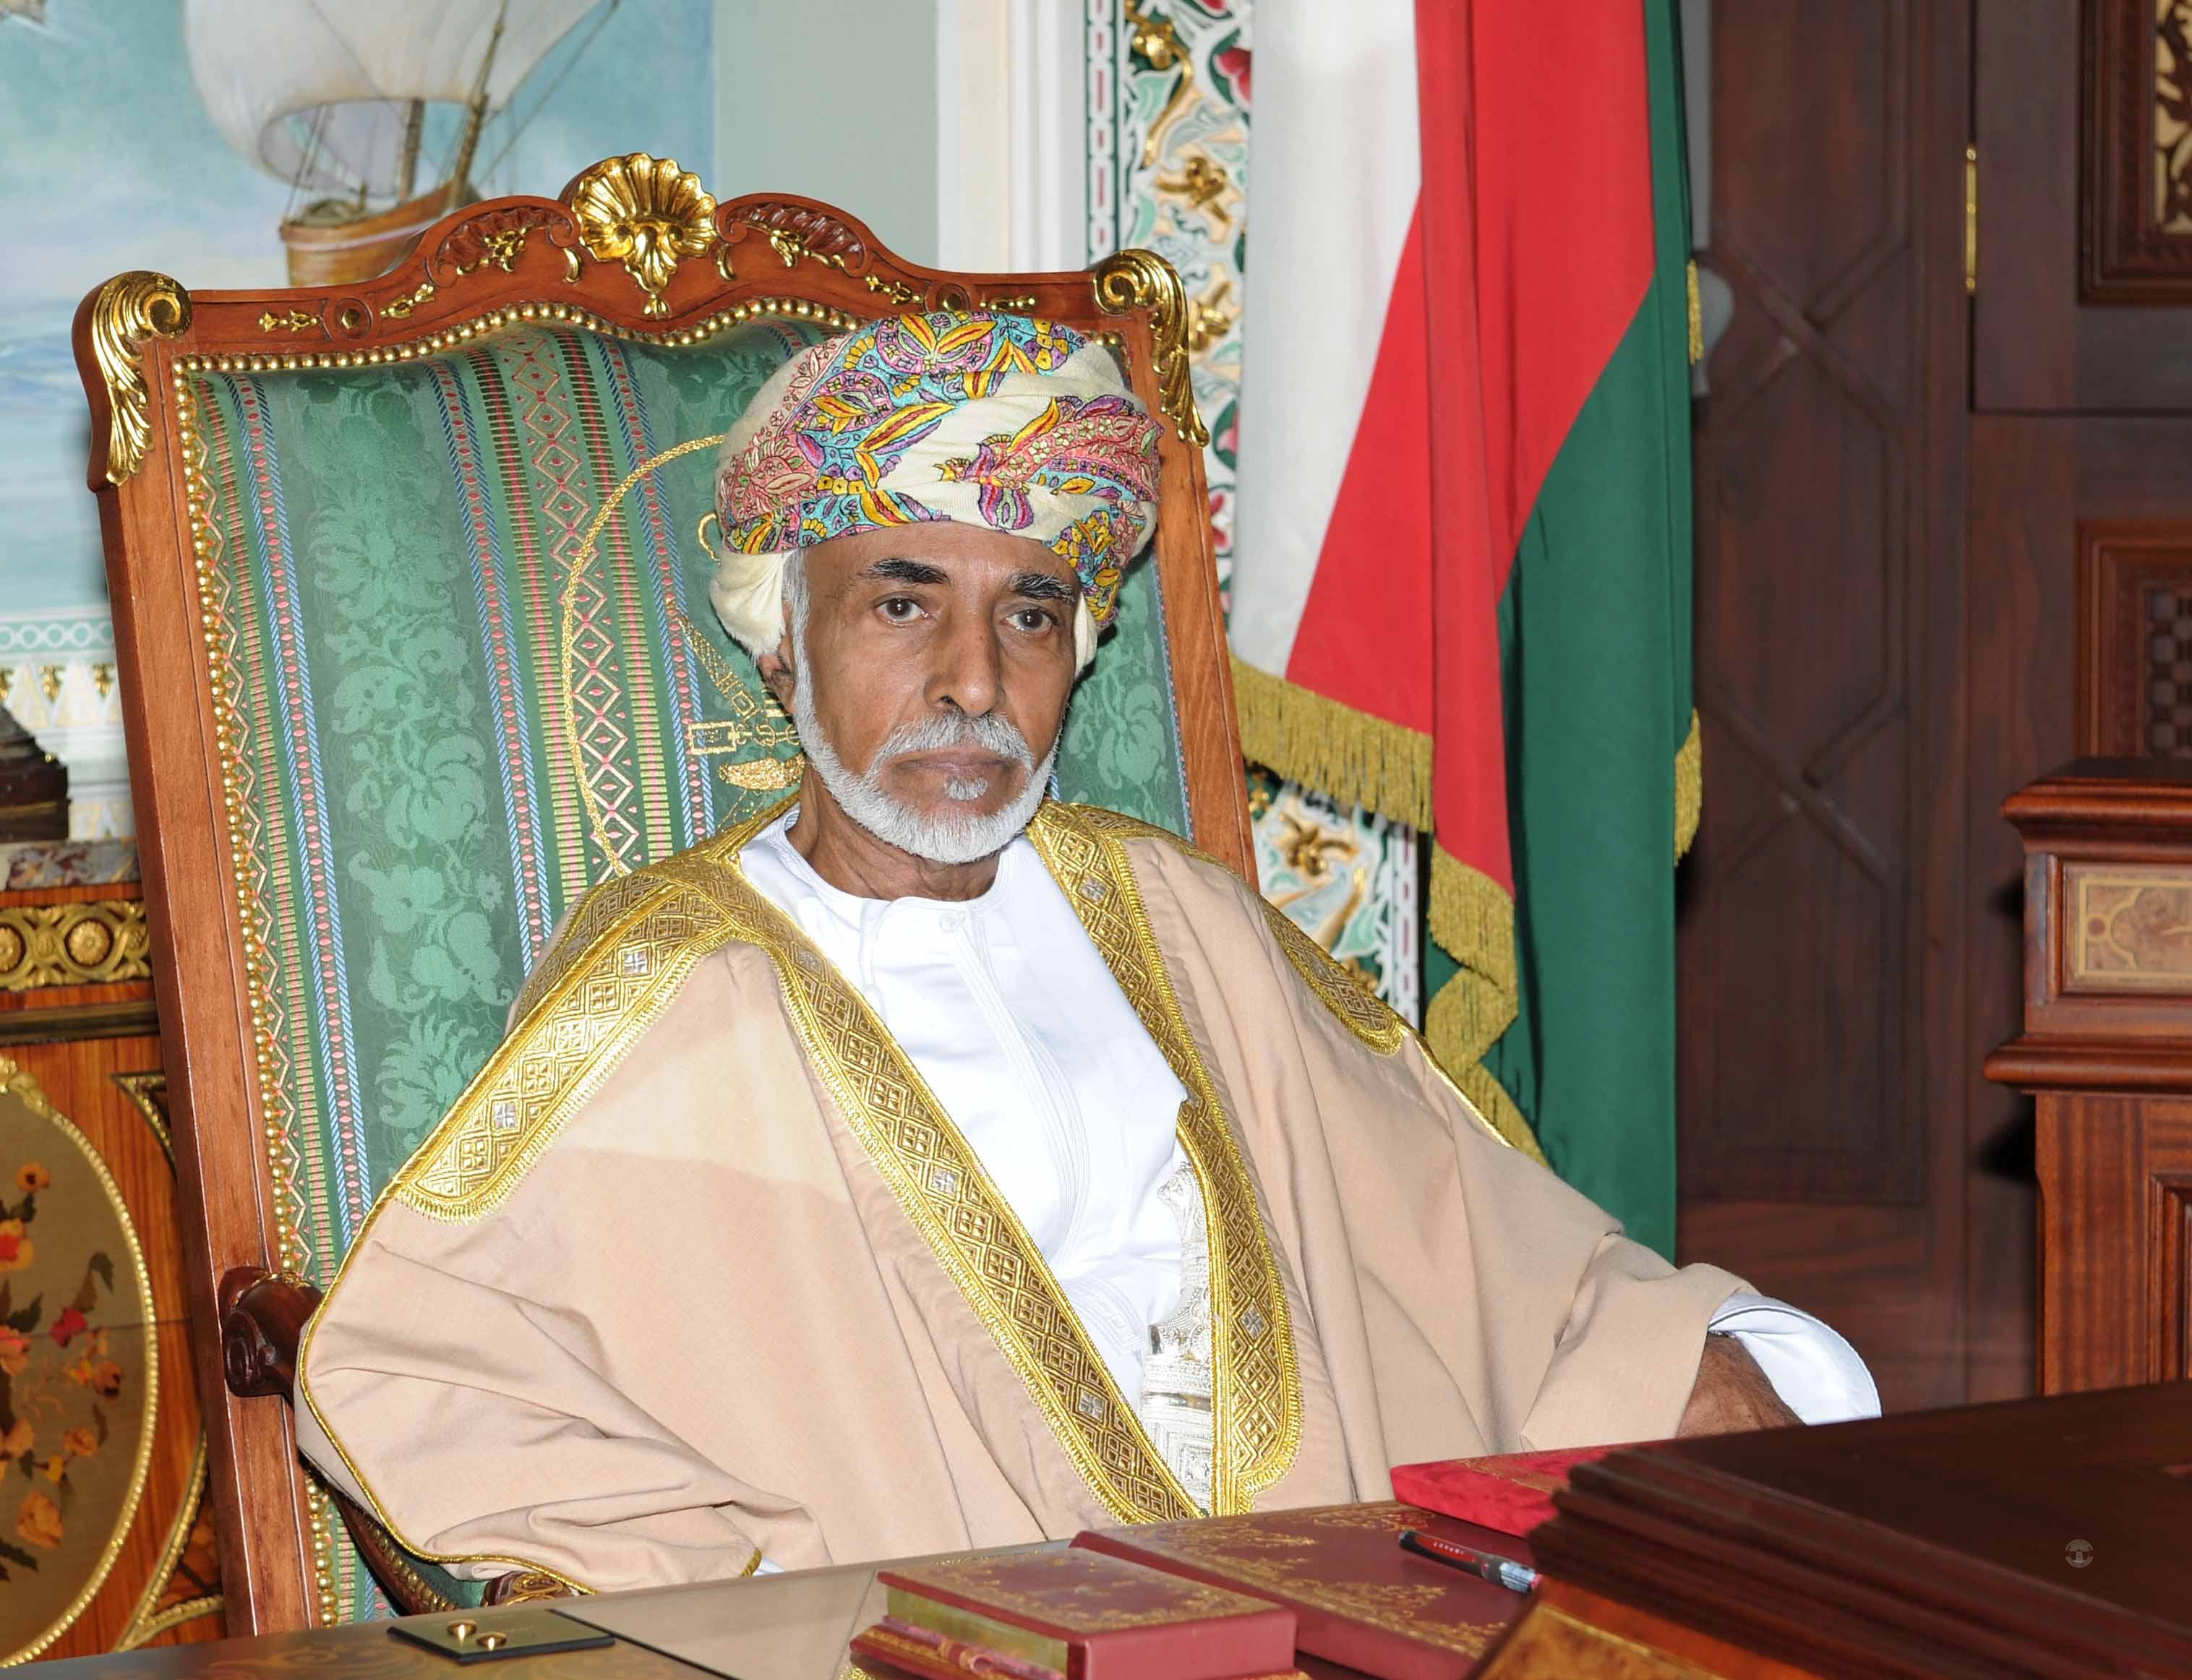 His Majesty Sultan Qaboos sends greetings to Queen Elizabeth